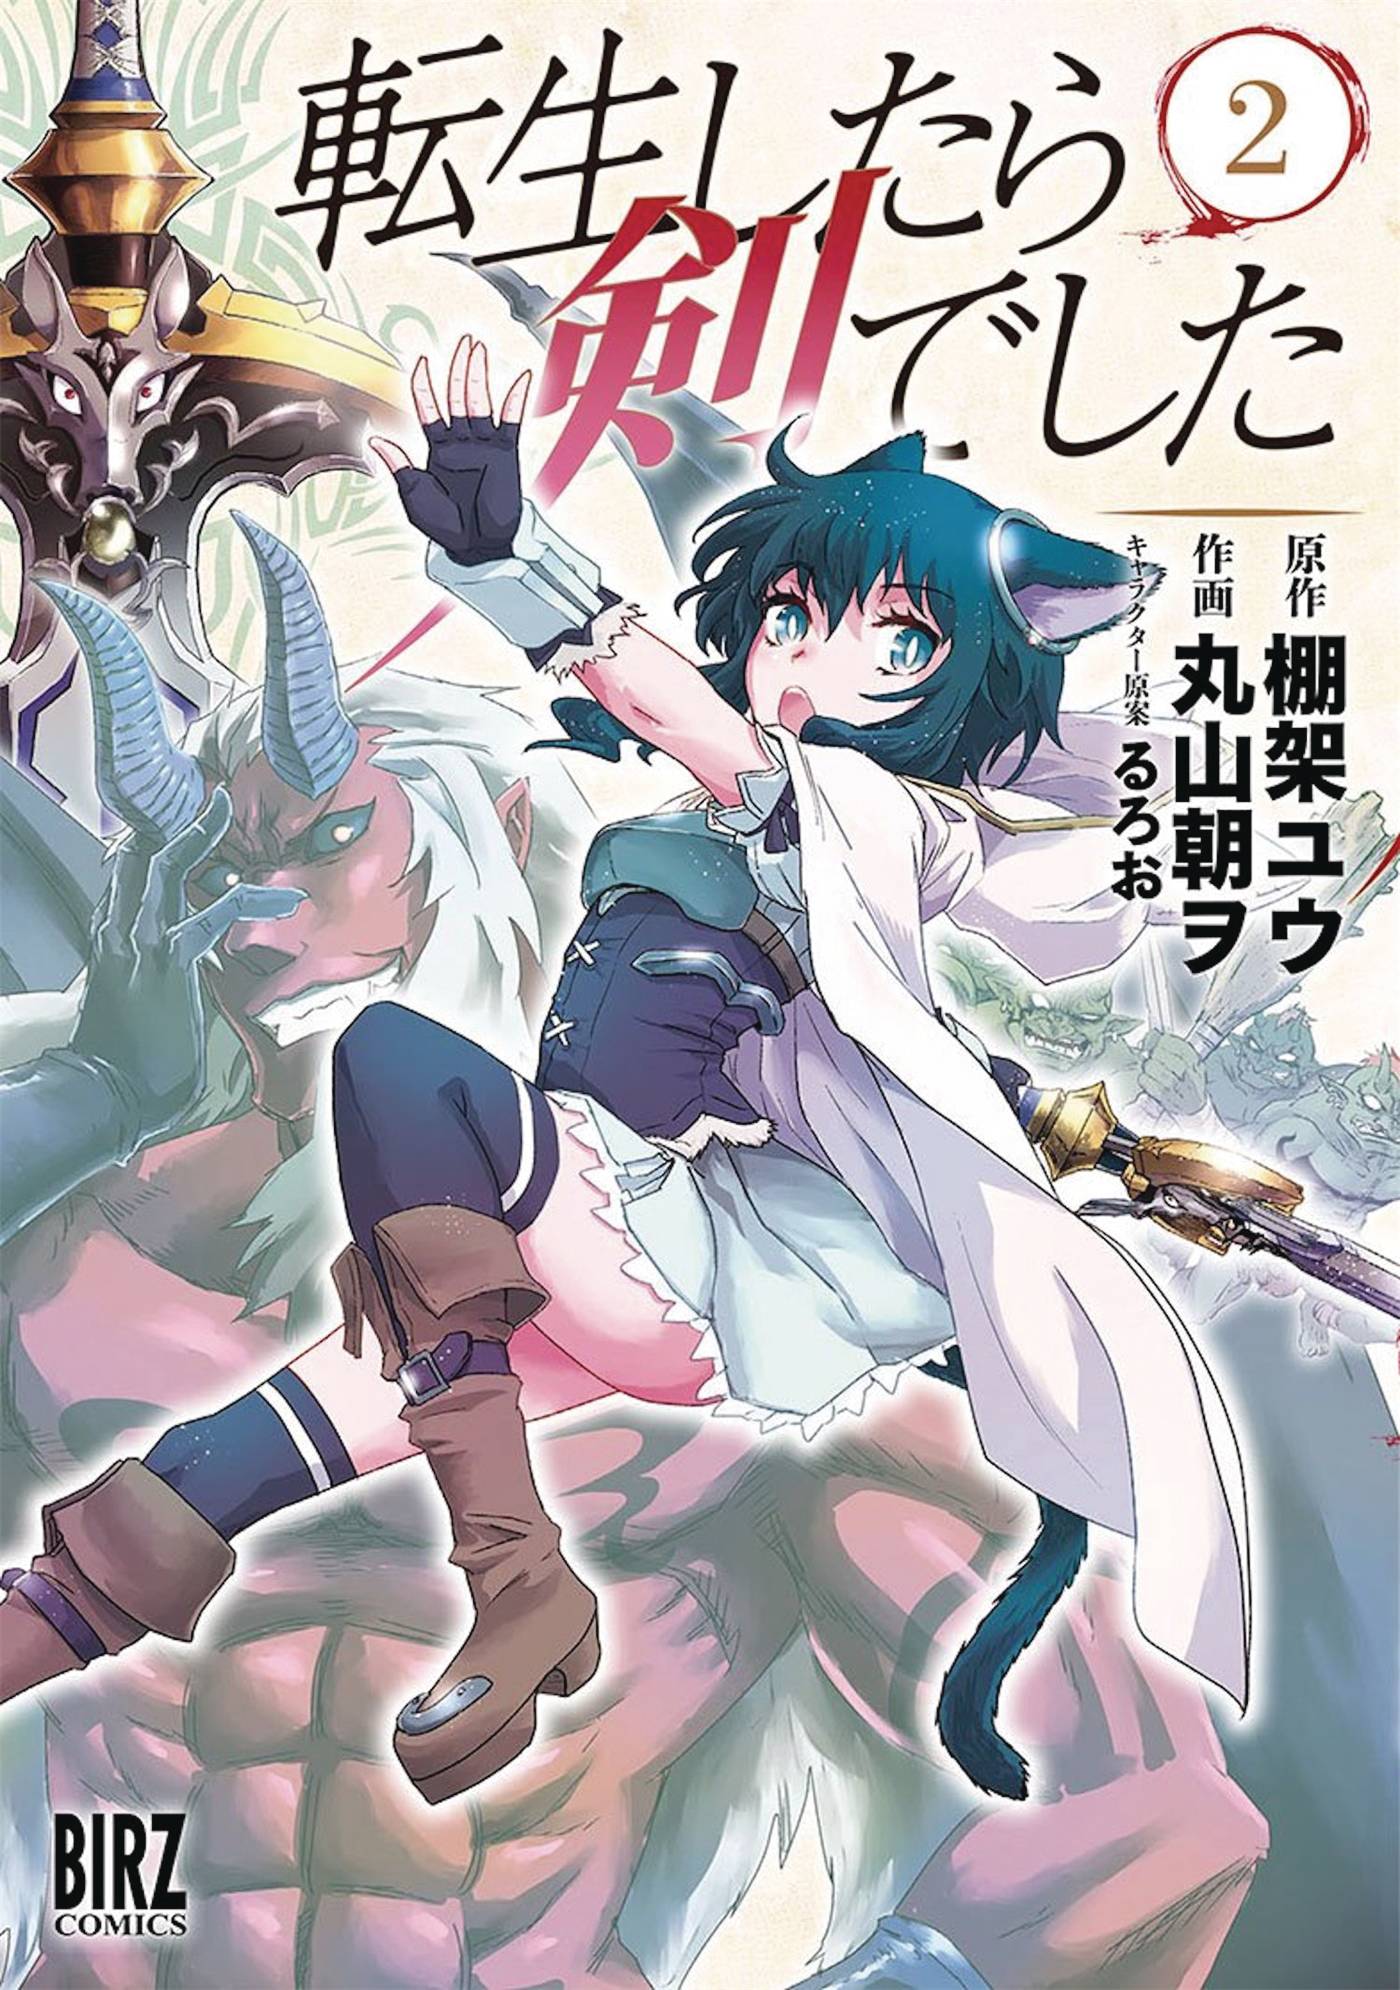 Reincarnated As a Sword Manga Volume 2